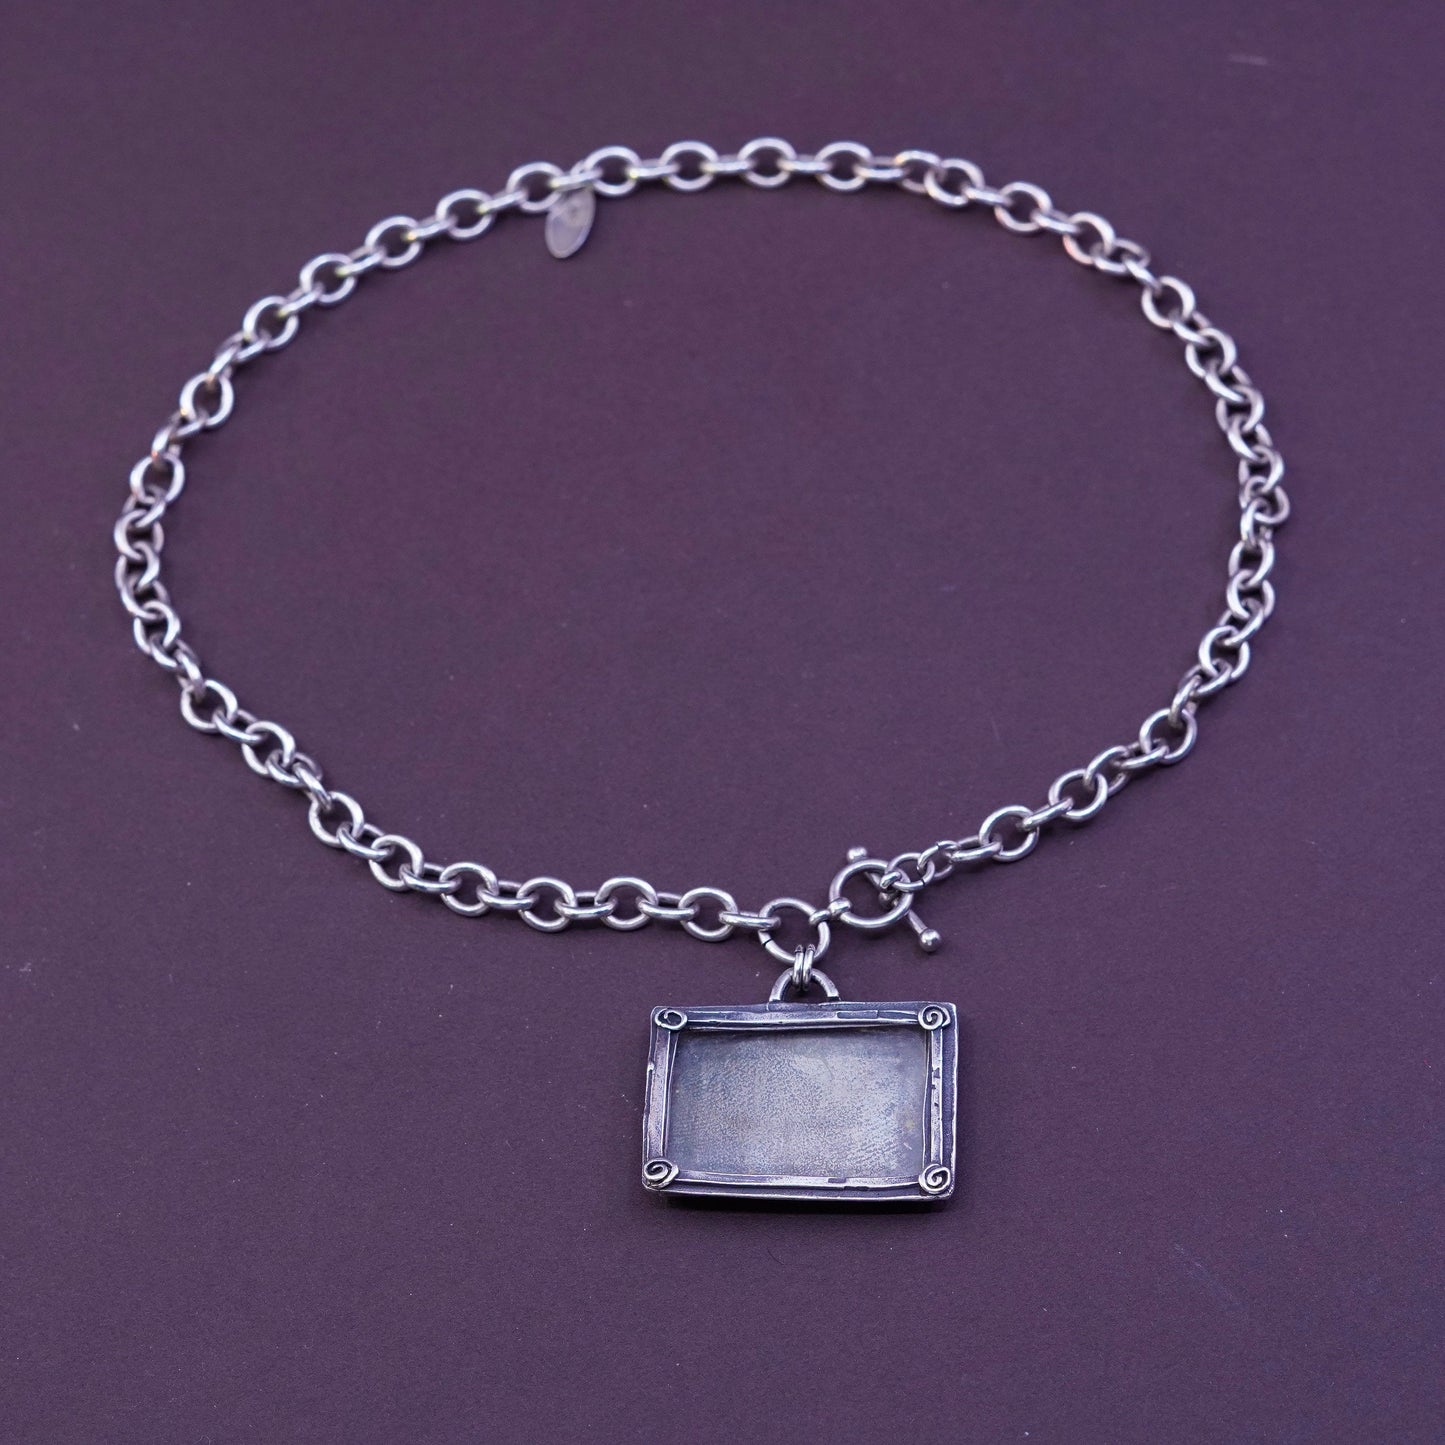 15”, michele baratta sterling silver necklace, 925 bold circle chain w/ locket